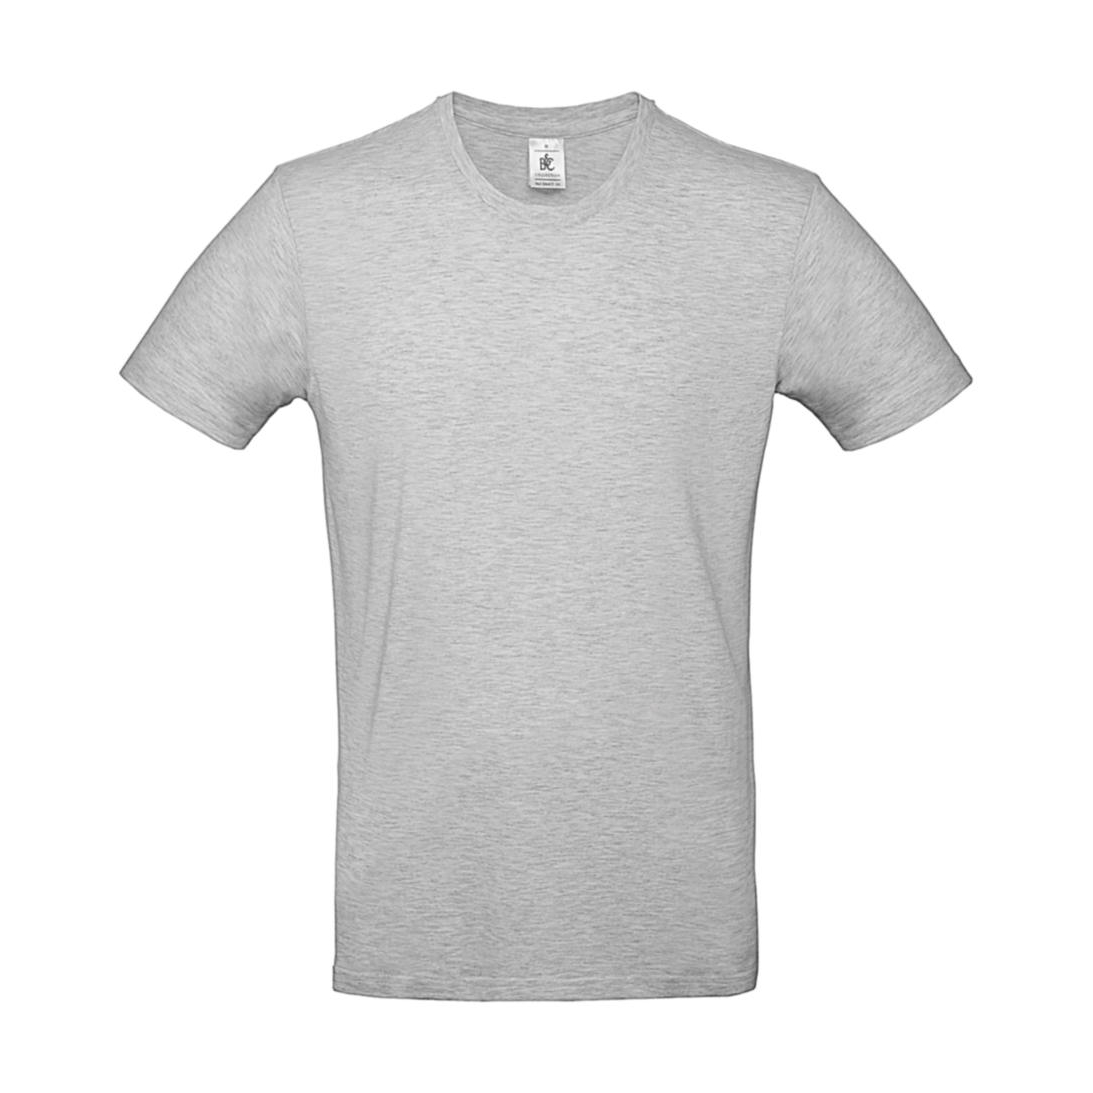 Triko pánské B&C E190 T-Shirt - světle šedé, L